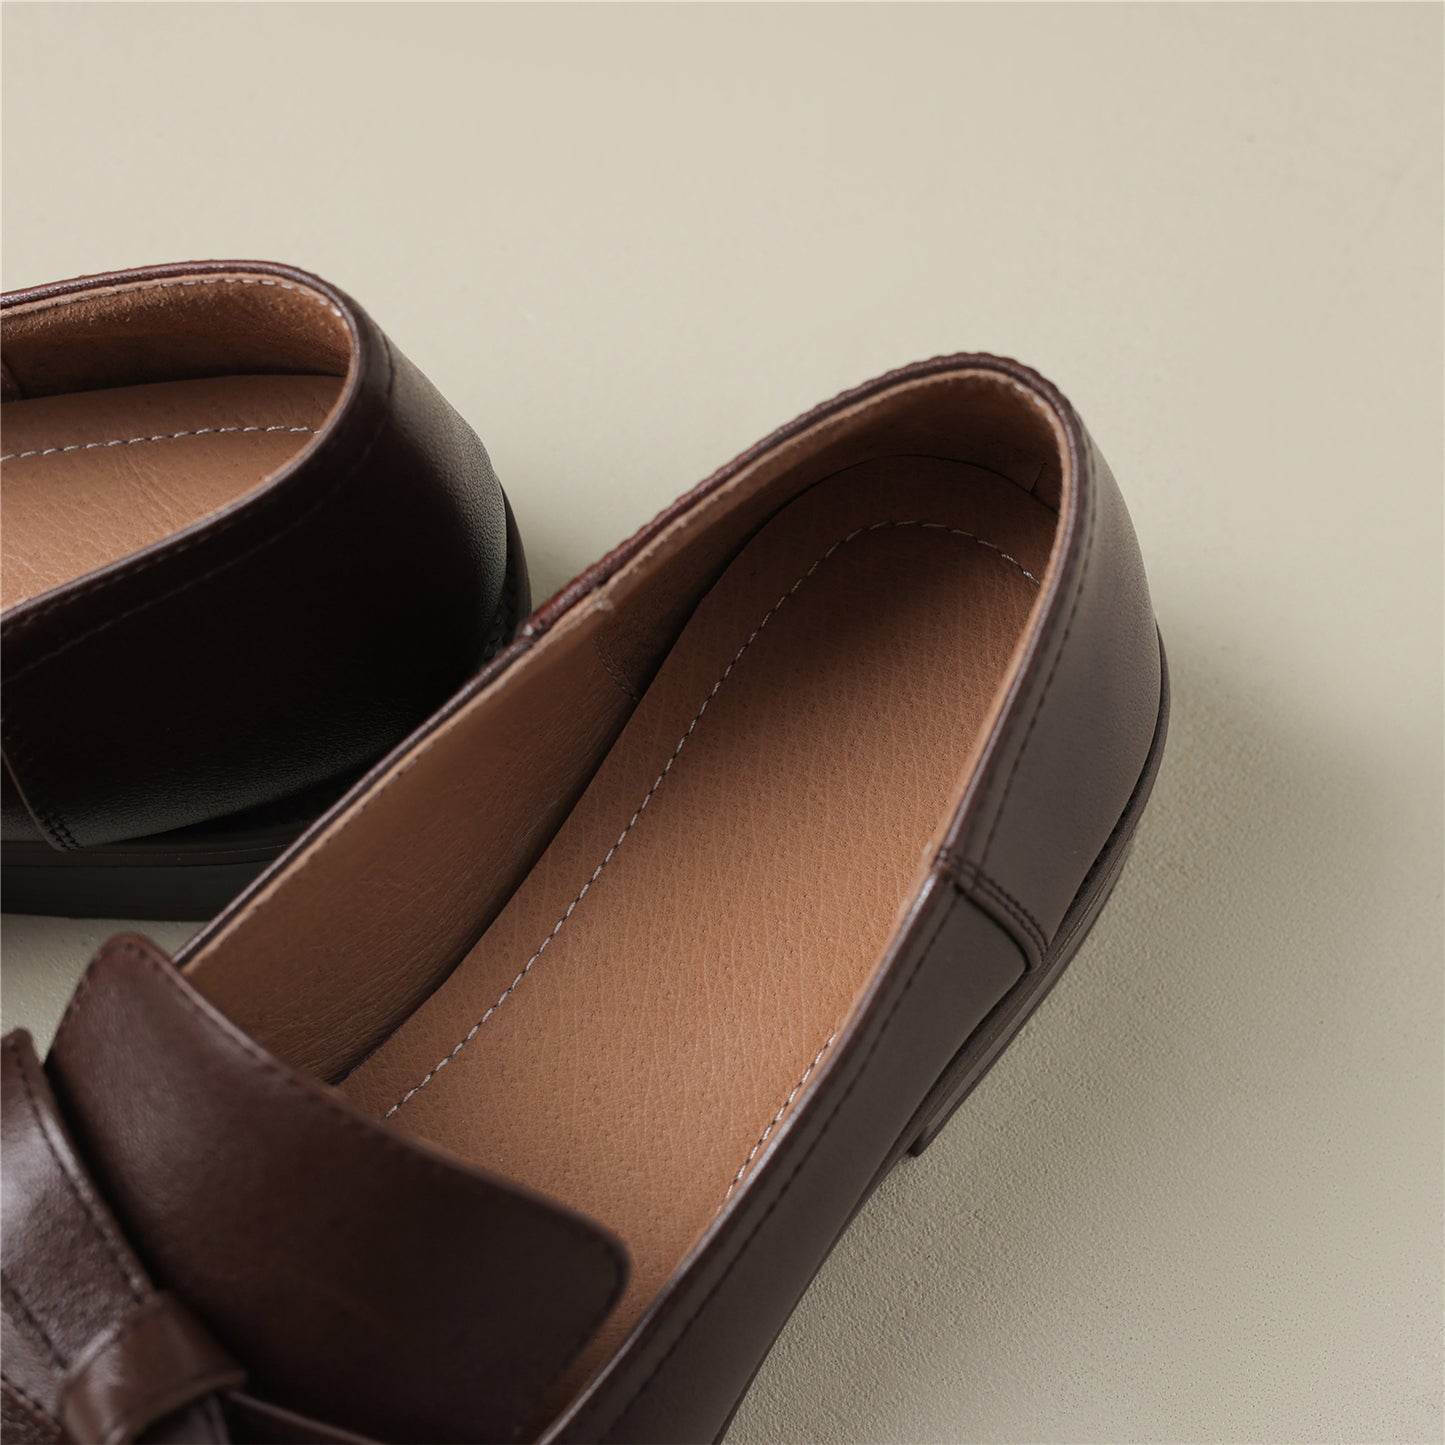 TinaCus Genuine Leather Round Toe Handmade Women's Slip On Comfort Flat Shoes